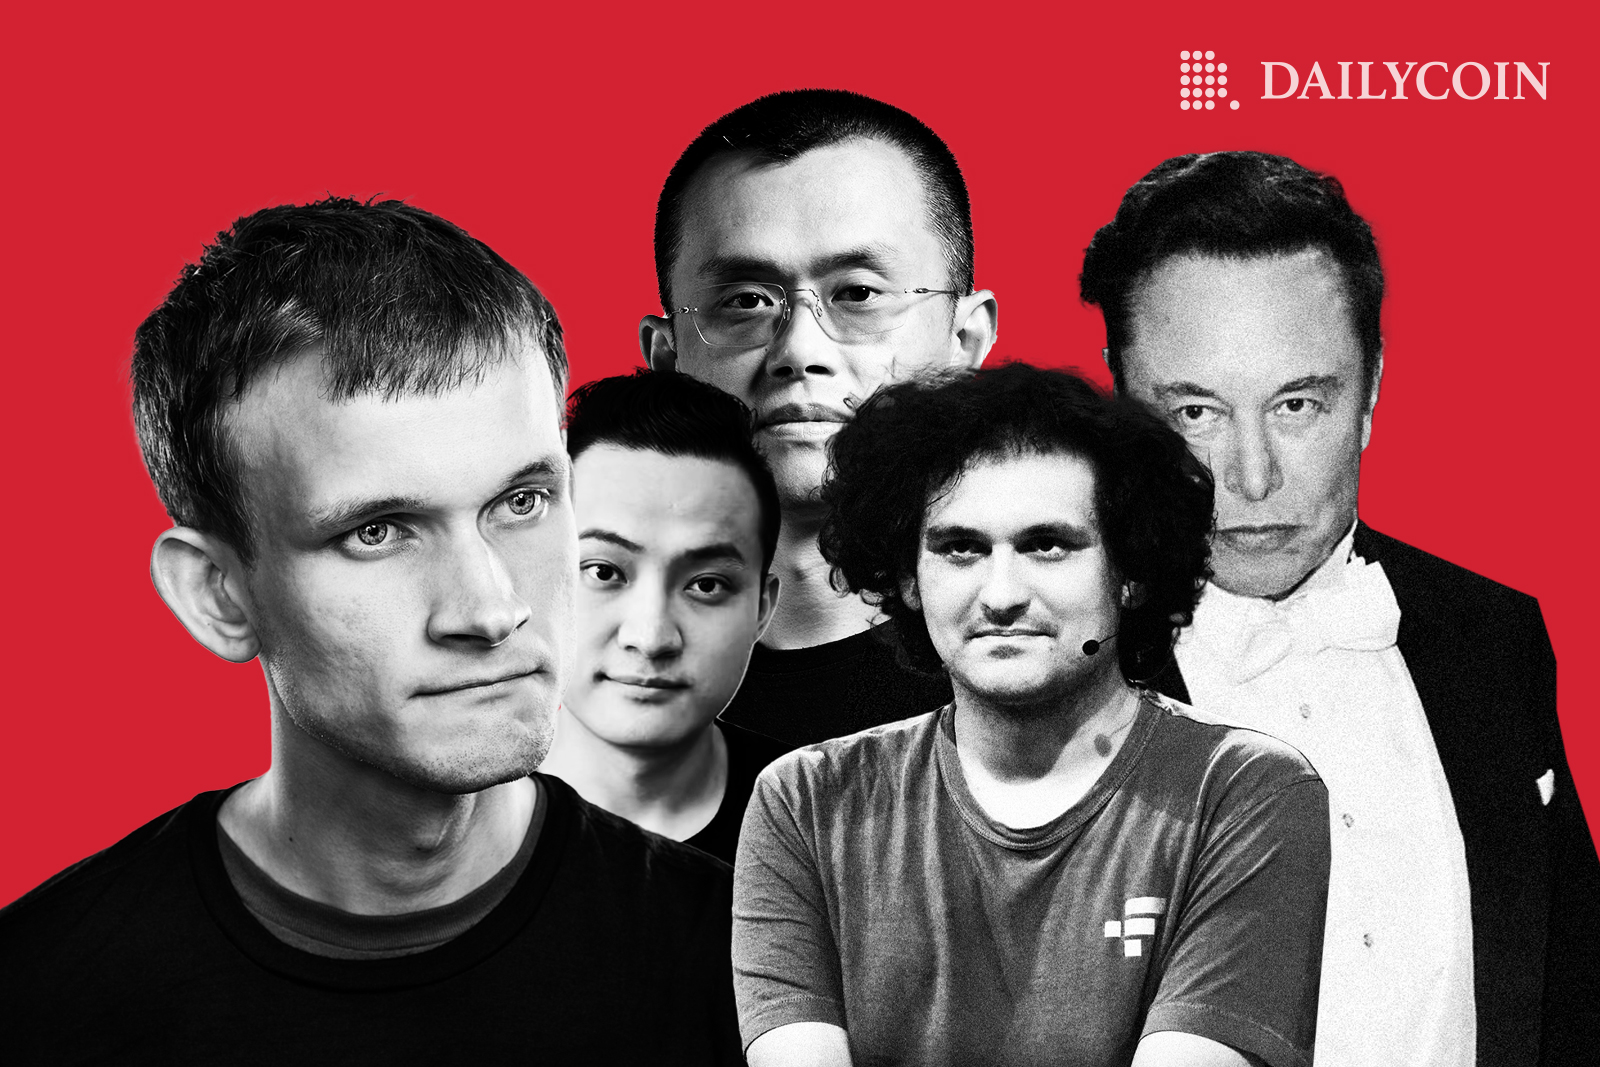 Changpeg Zhao, Elon Musk, Vitalik Buterin, Sam Bankman-Fried and Justin Sun